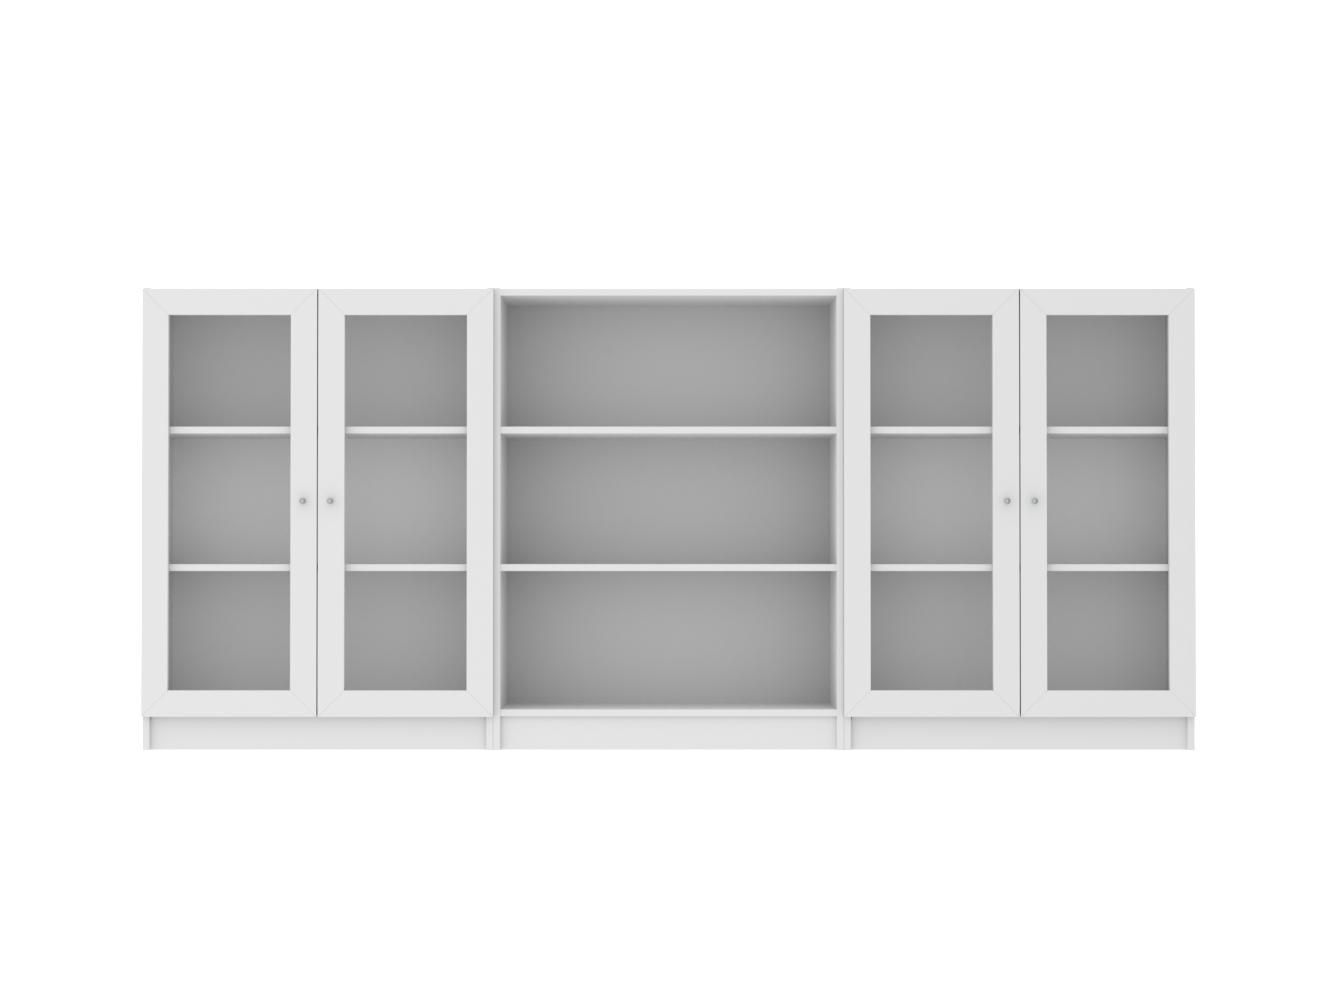  Книжный шкаф Билли 417 white ИКЕА (IKEA) изображение товара